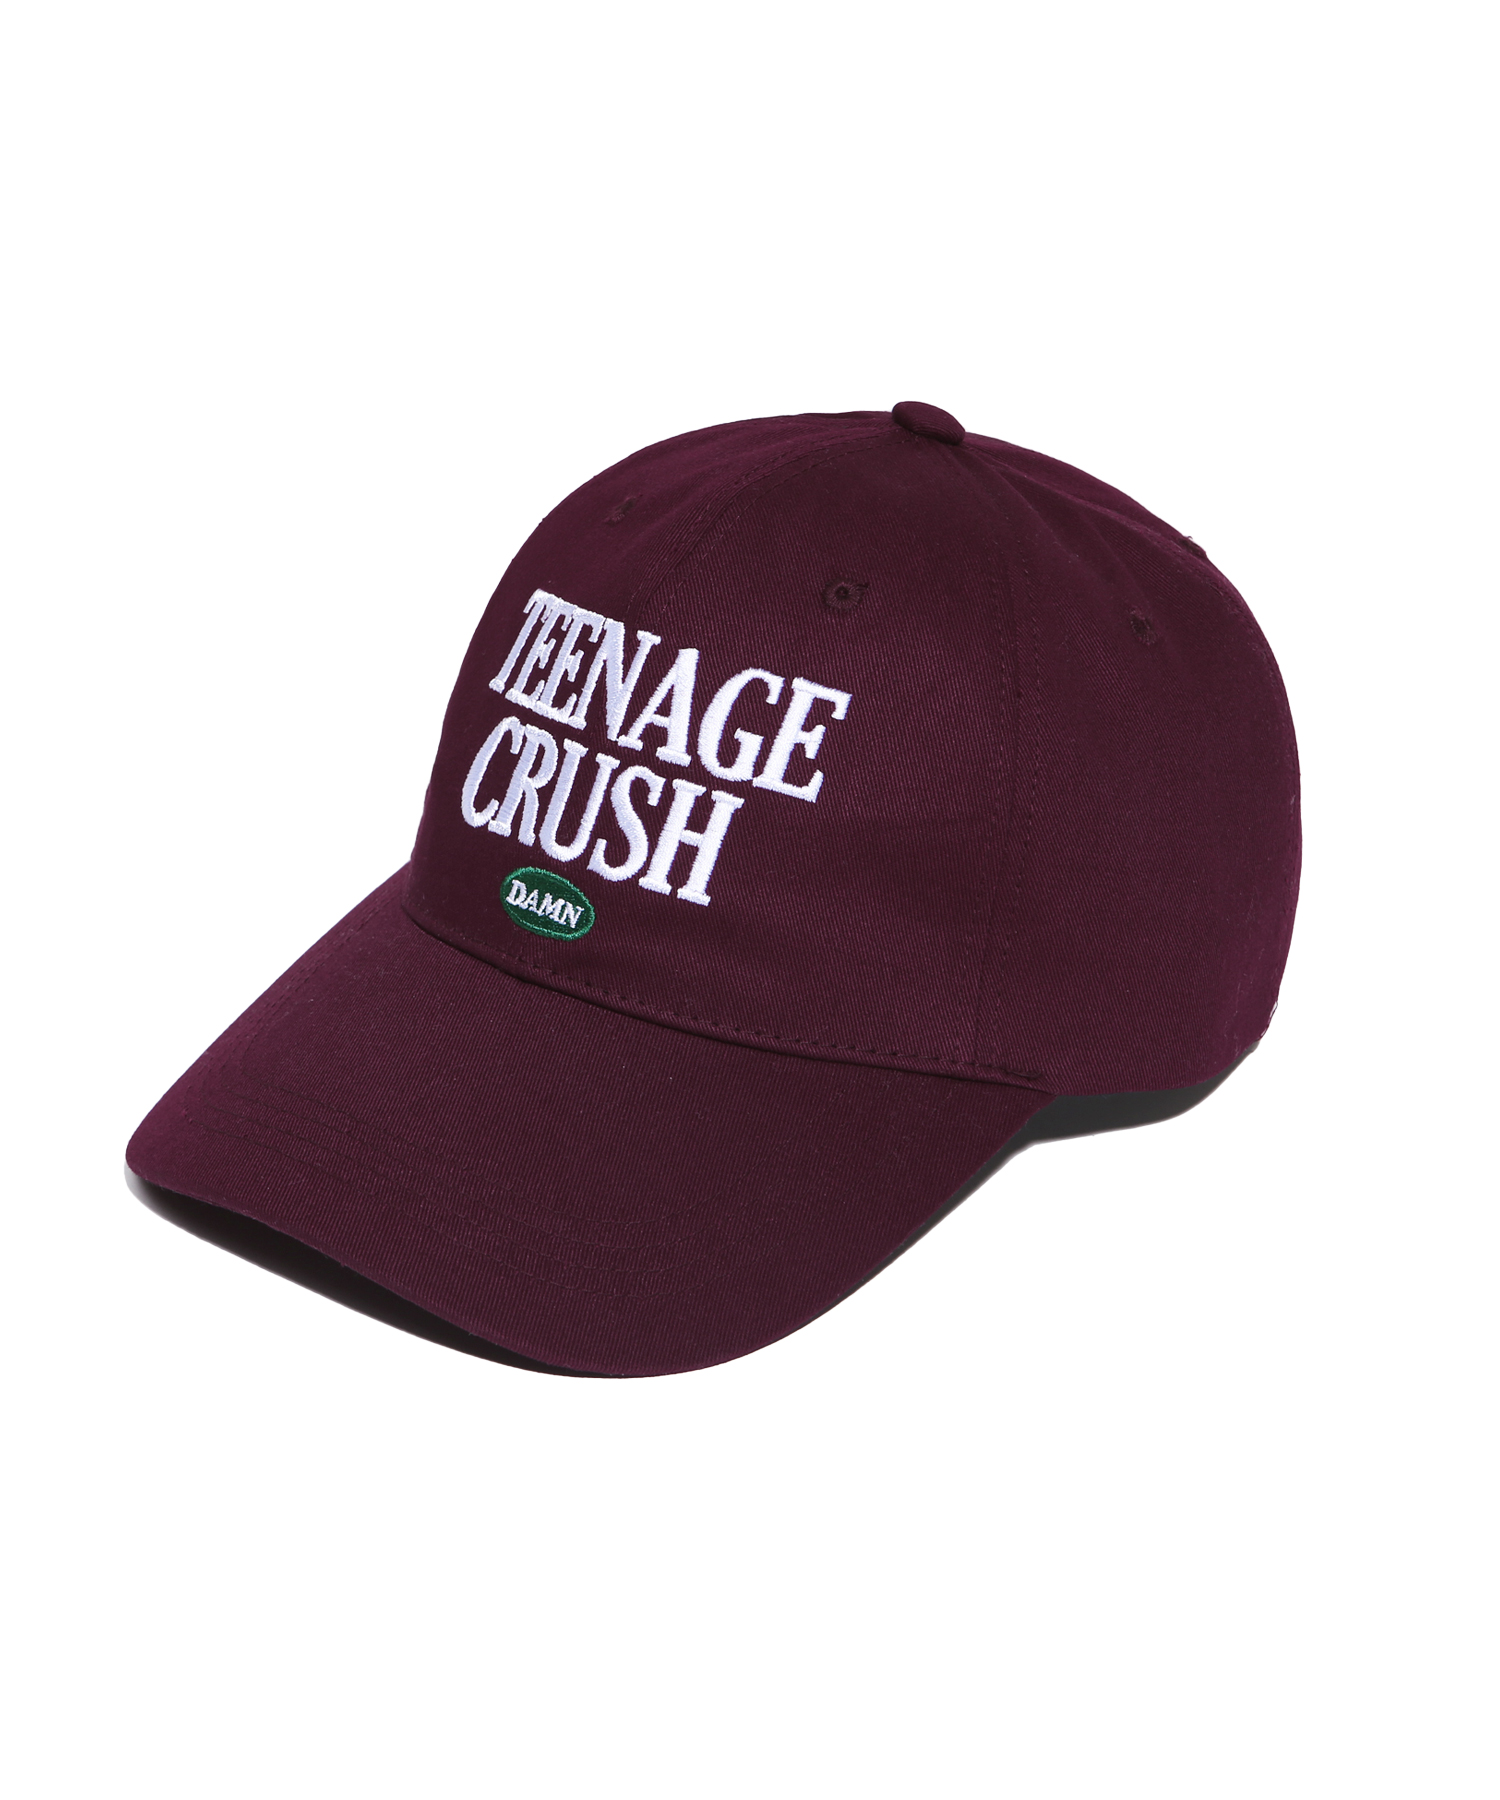 TEENAGE CRUSH CAP RED